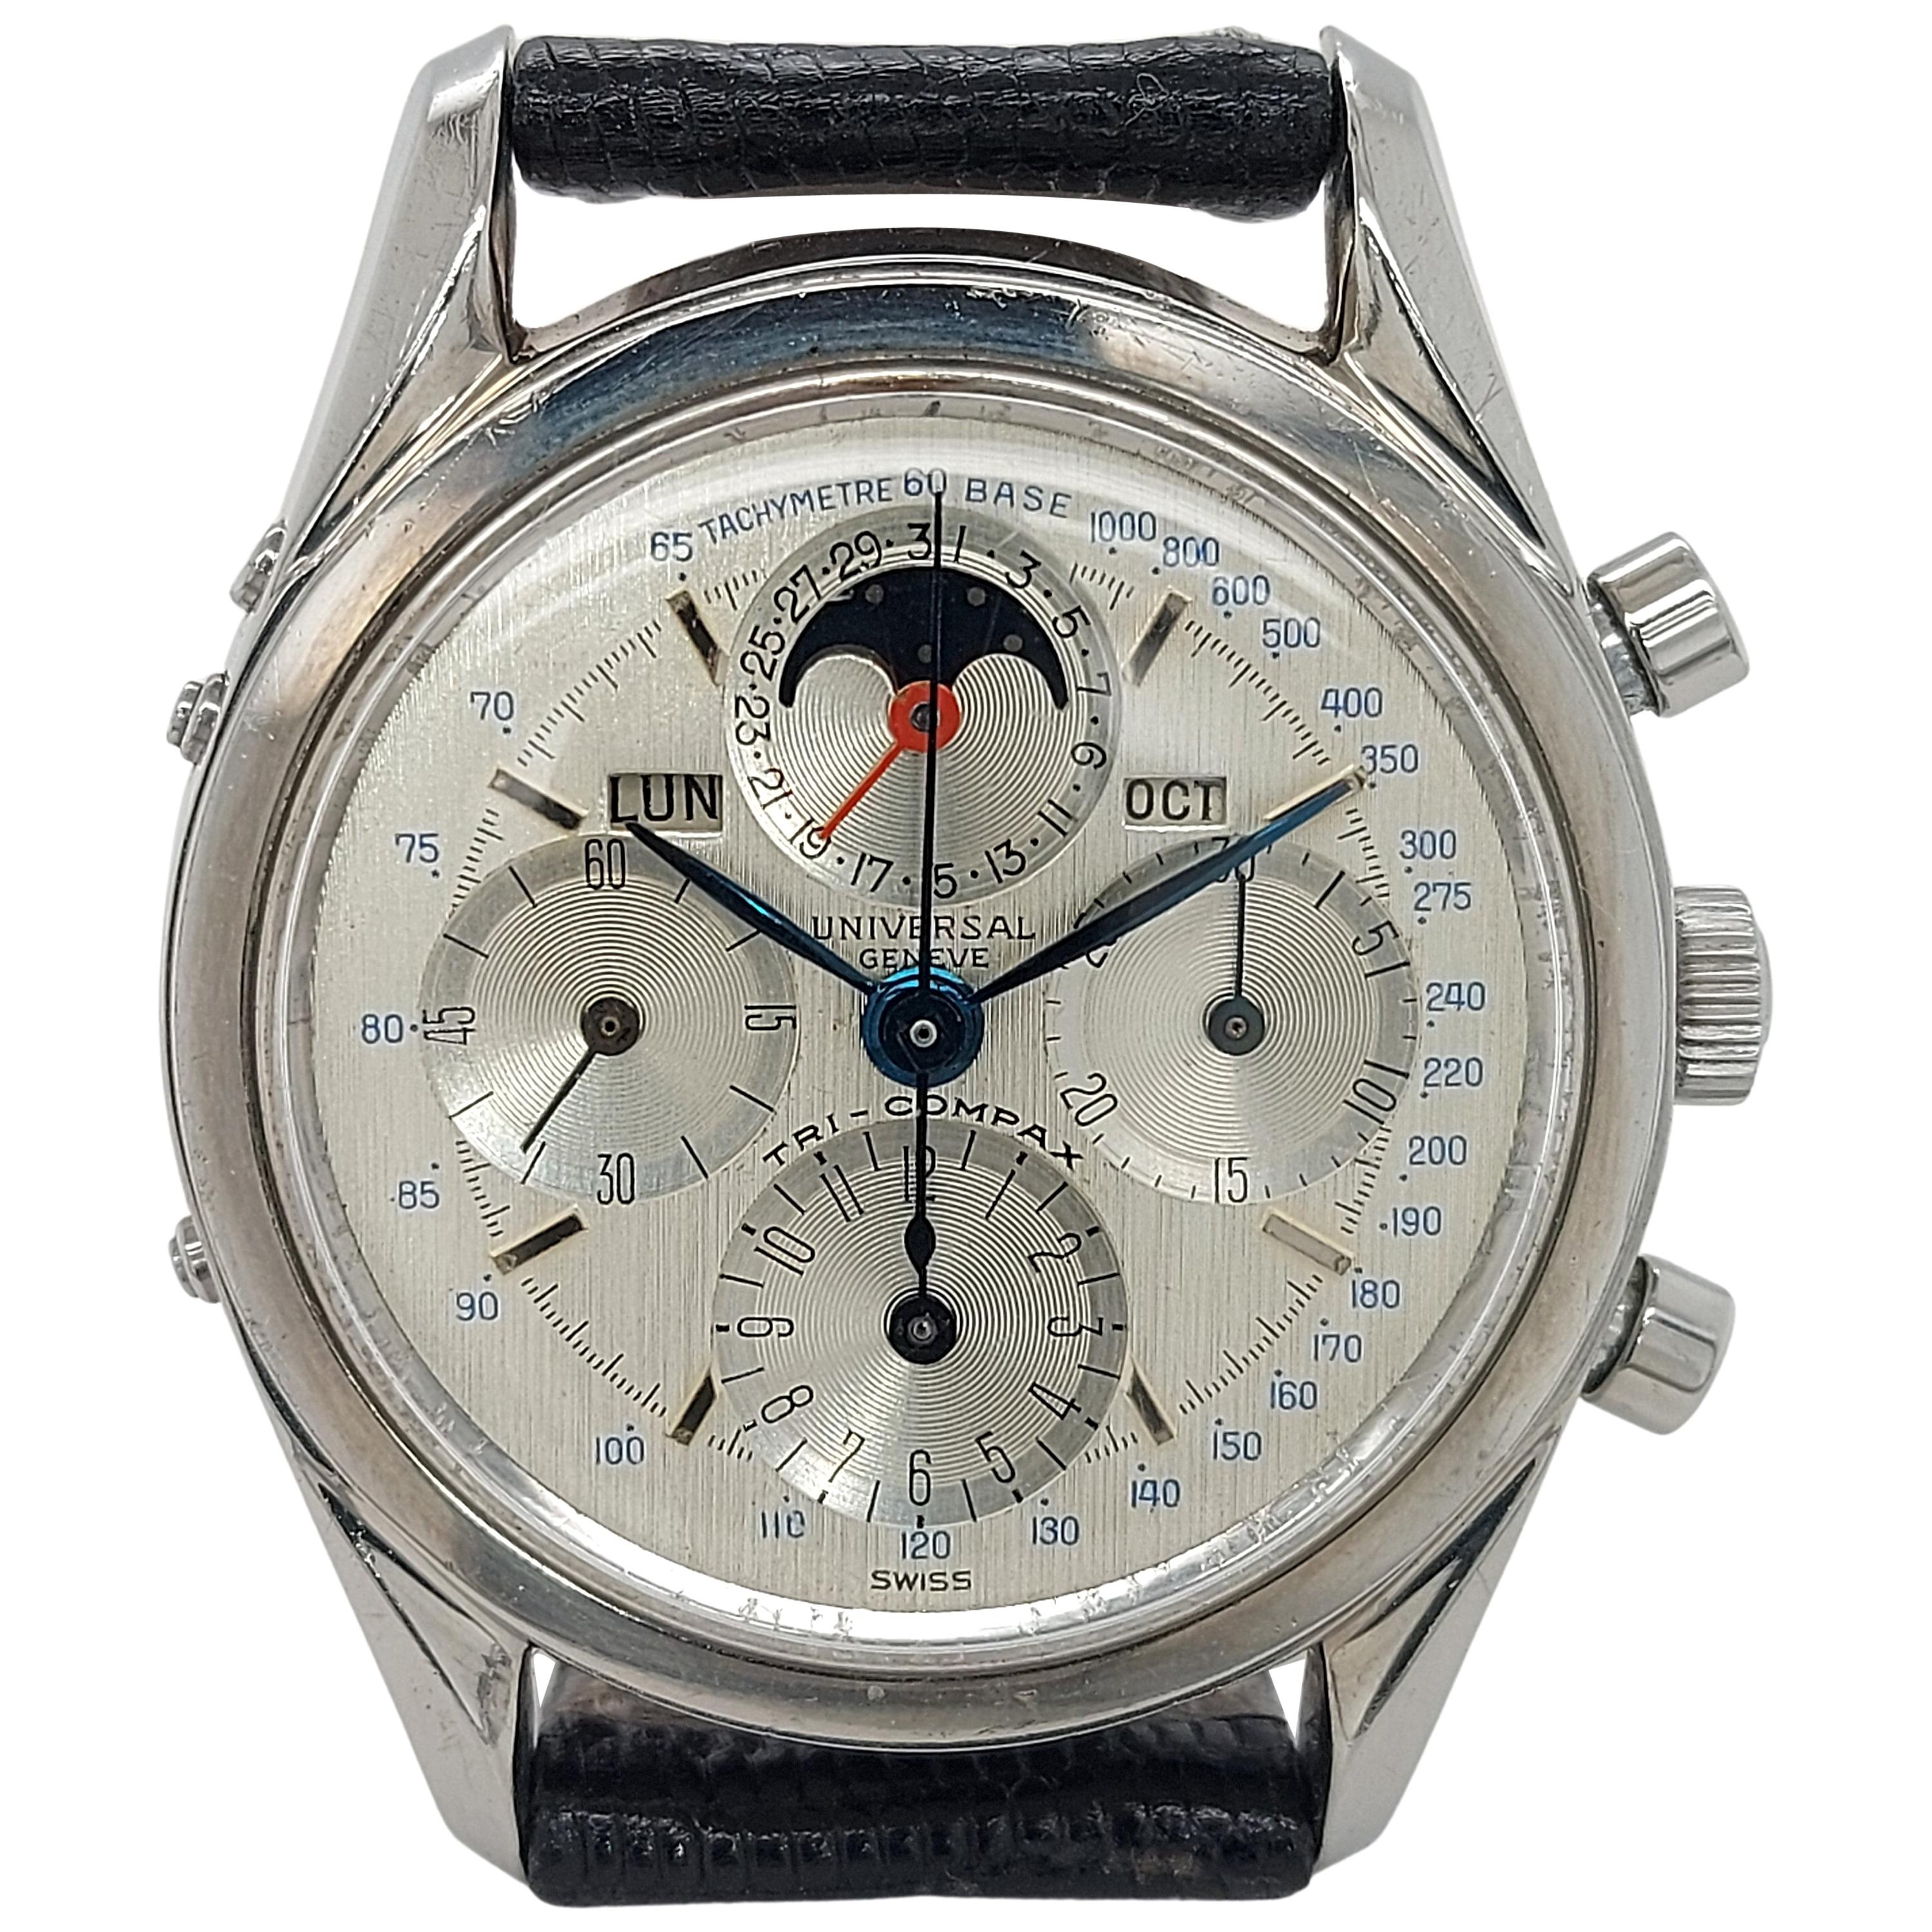 Universal Genève Tri Compax Chronograph Ref 222100, Seltene Collector Uhr